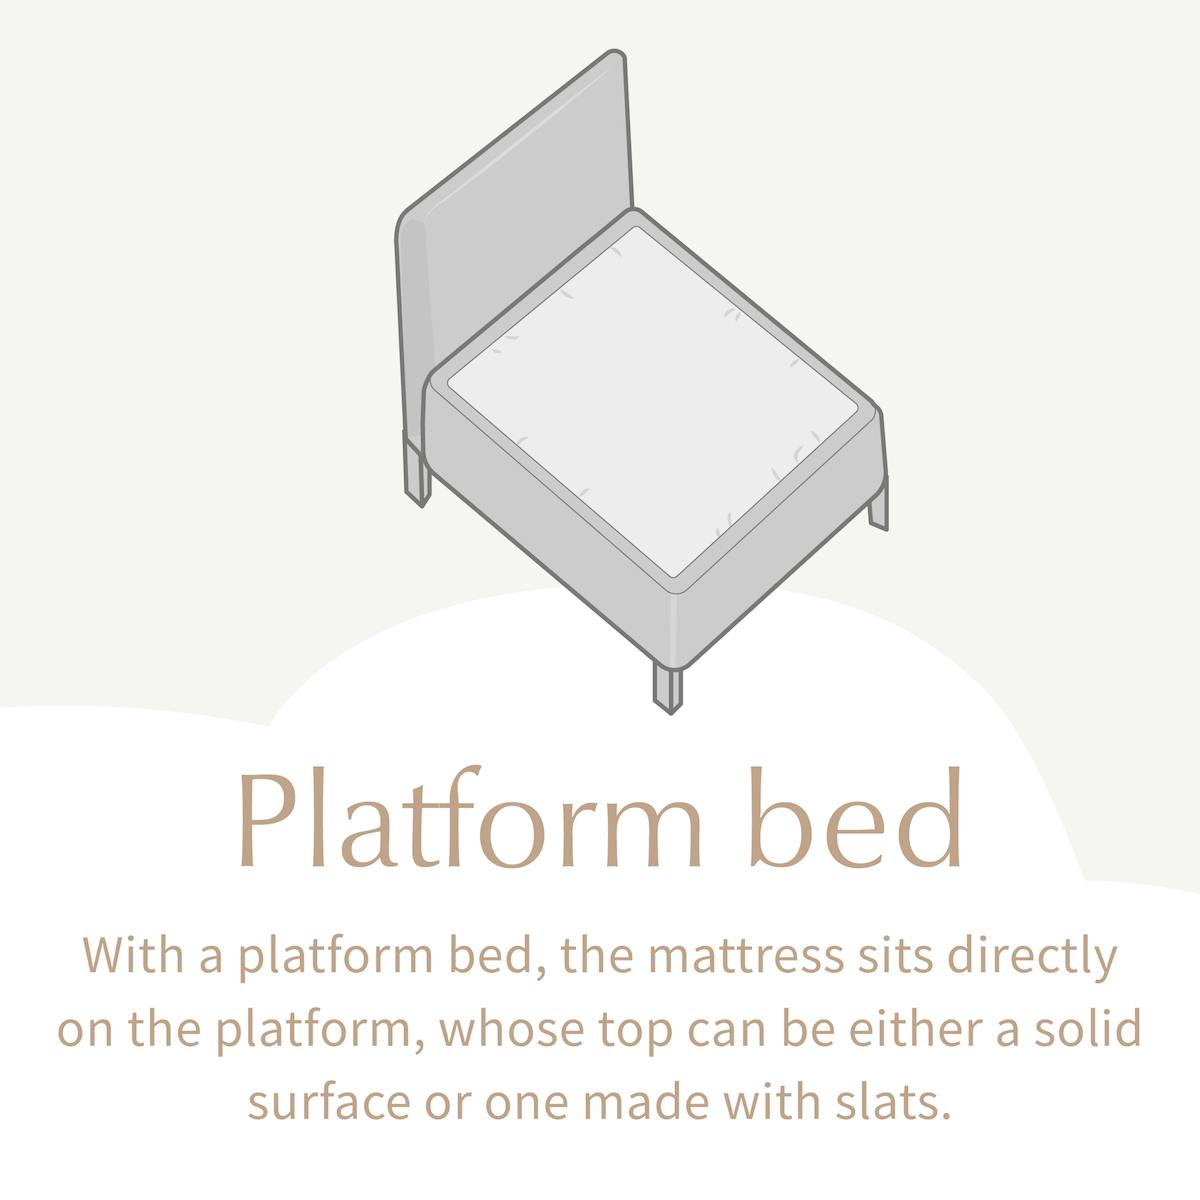 Illustration of platform bed with description underneath it: 